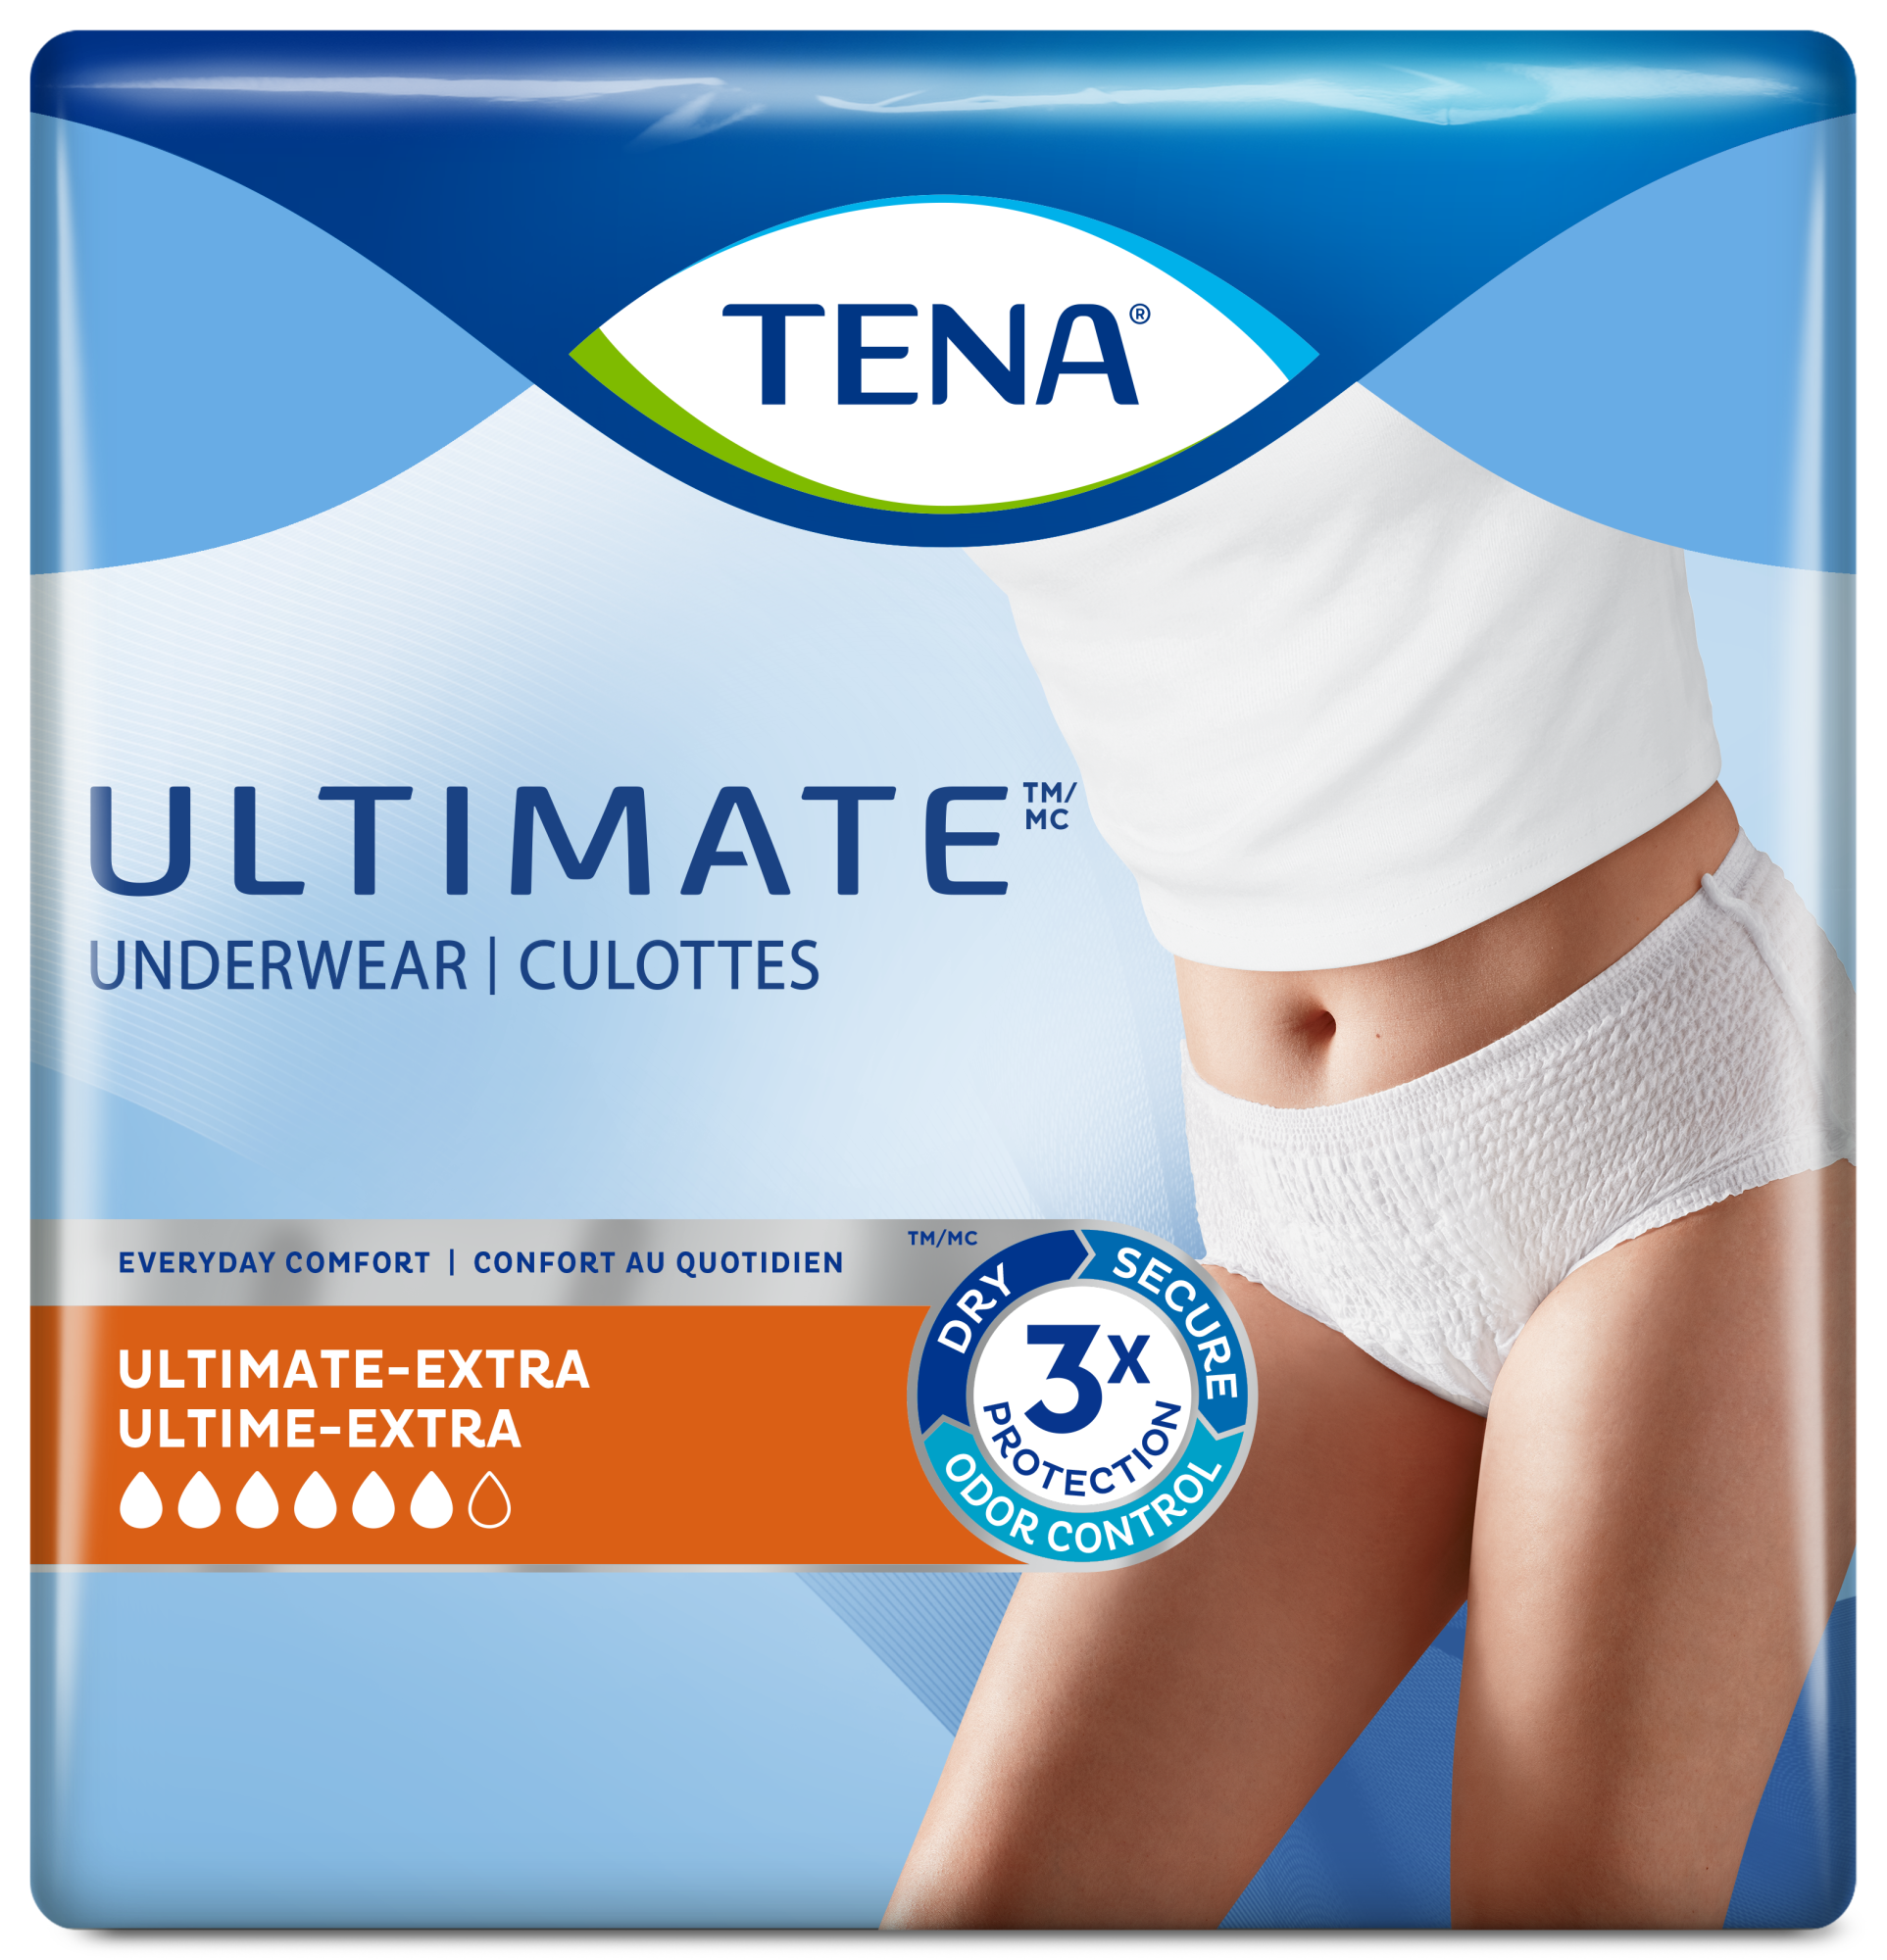 https://tena-images.essity.com/images-c5/623/376623/optimized-AzurePNG2K/tena-ultimate-underwear-ultimate-extra-beauty.png